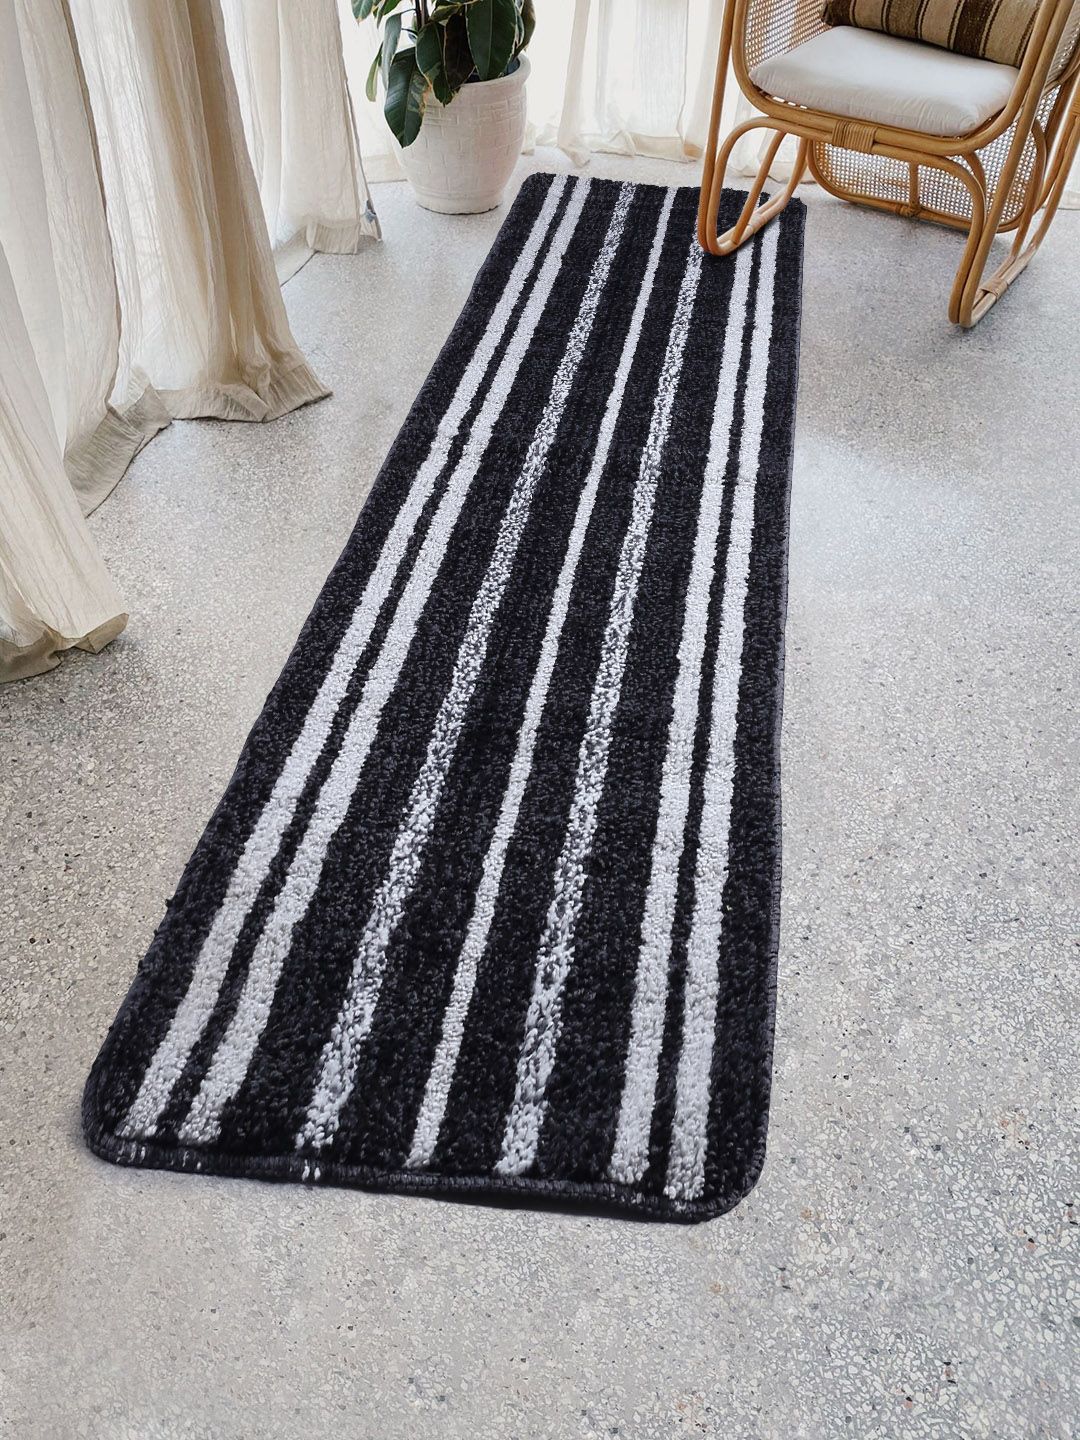 Saral Home Black & White Striped Anti-Skid Floor Runner Price in India